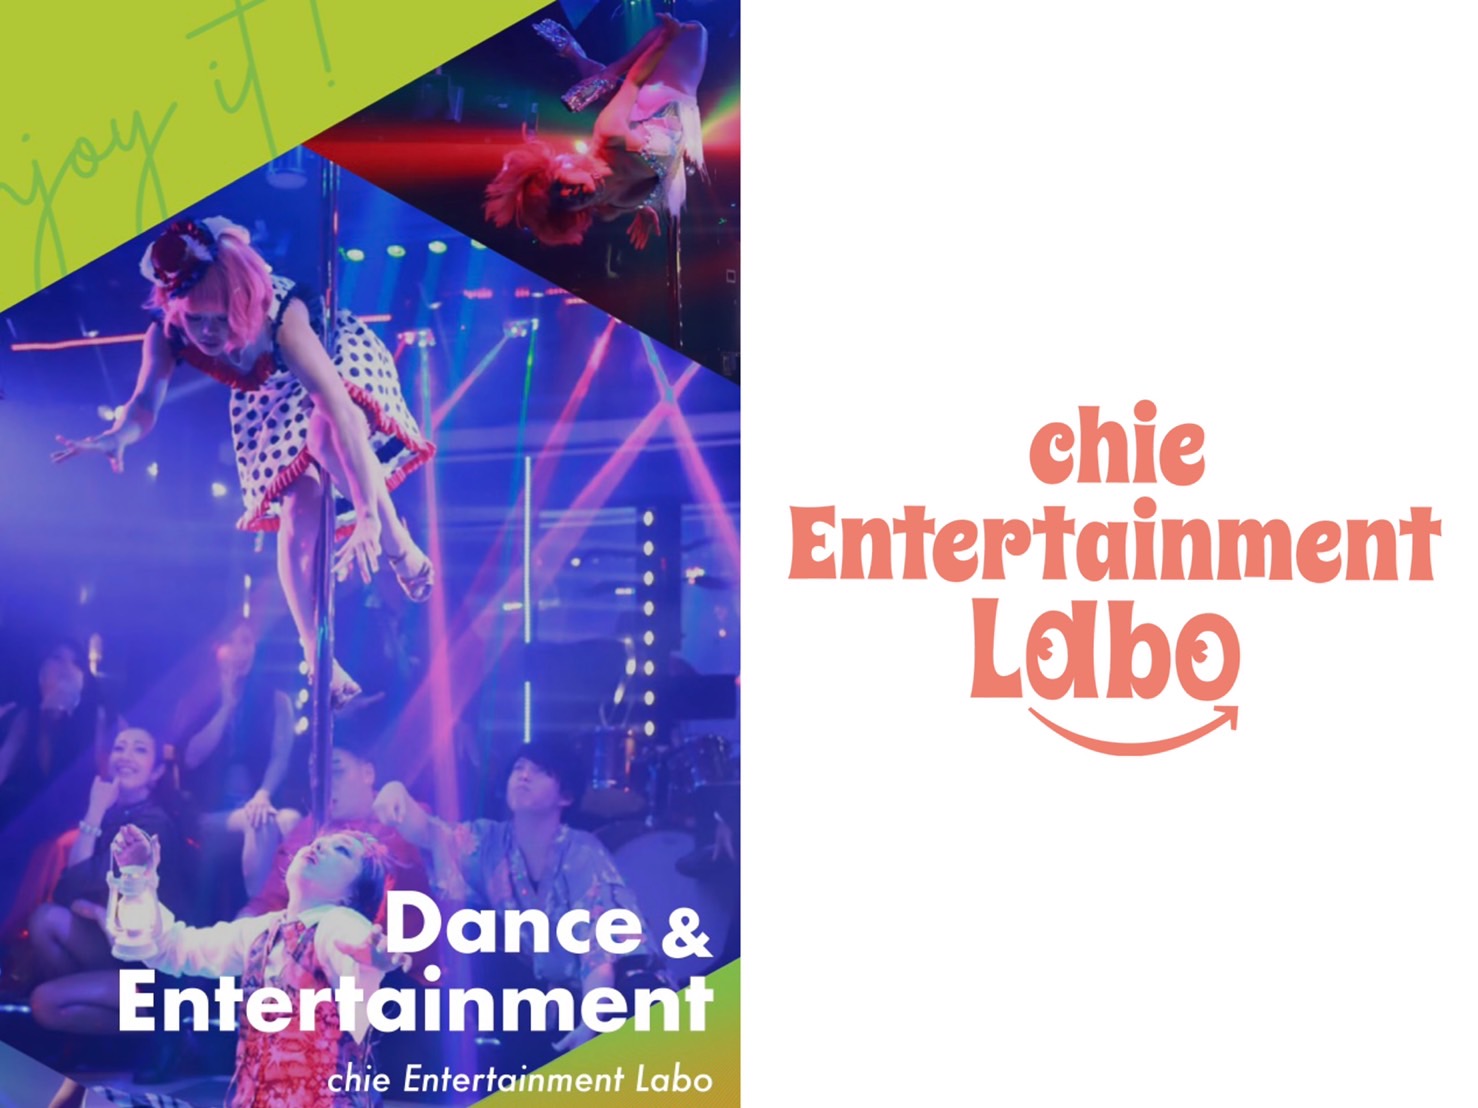 chie Entertainment Labo 祇園